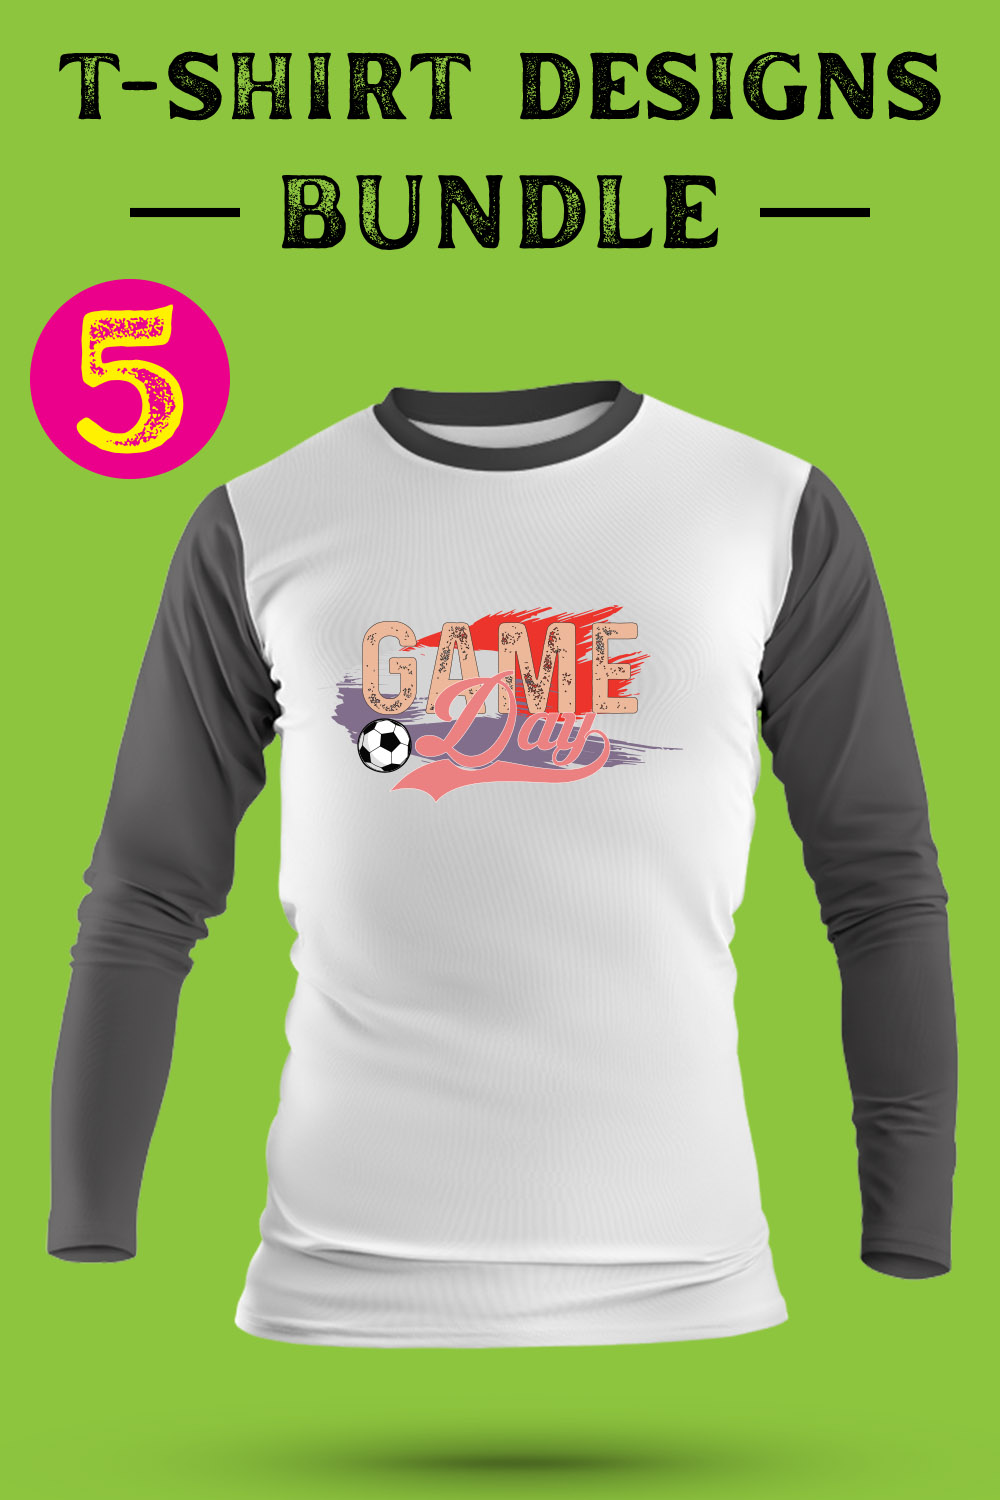 American Football Day T Shirt Designs Bundle voli-15 pinterest preview image.